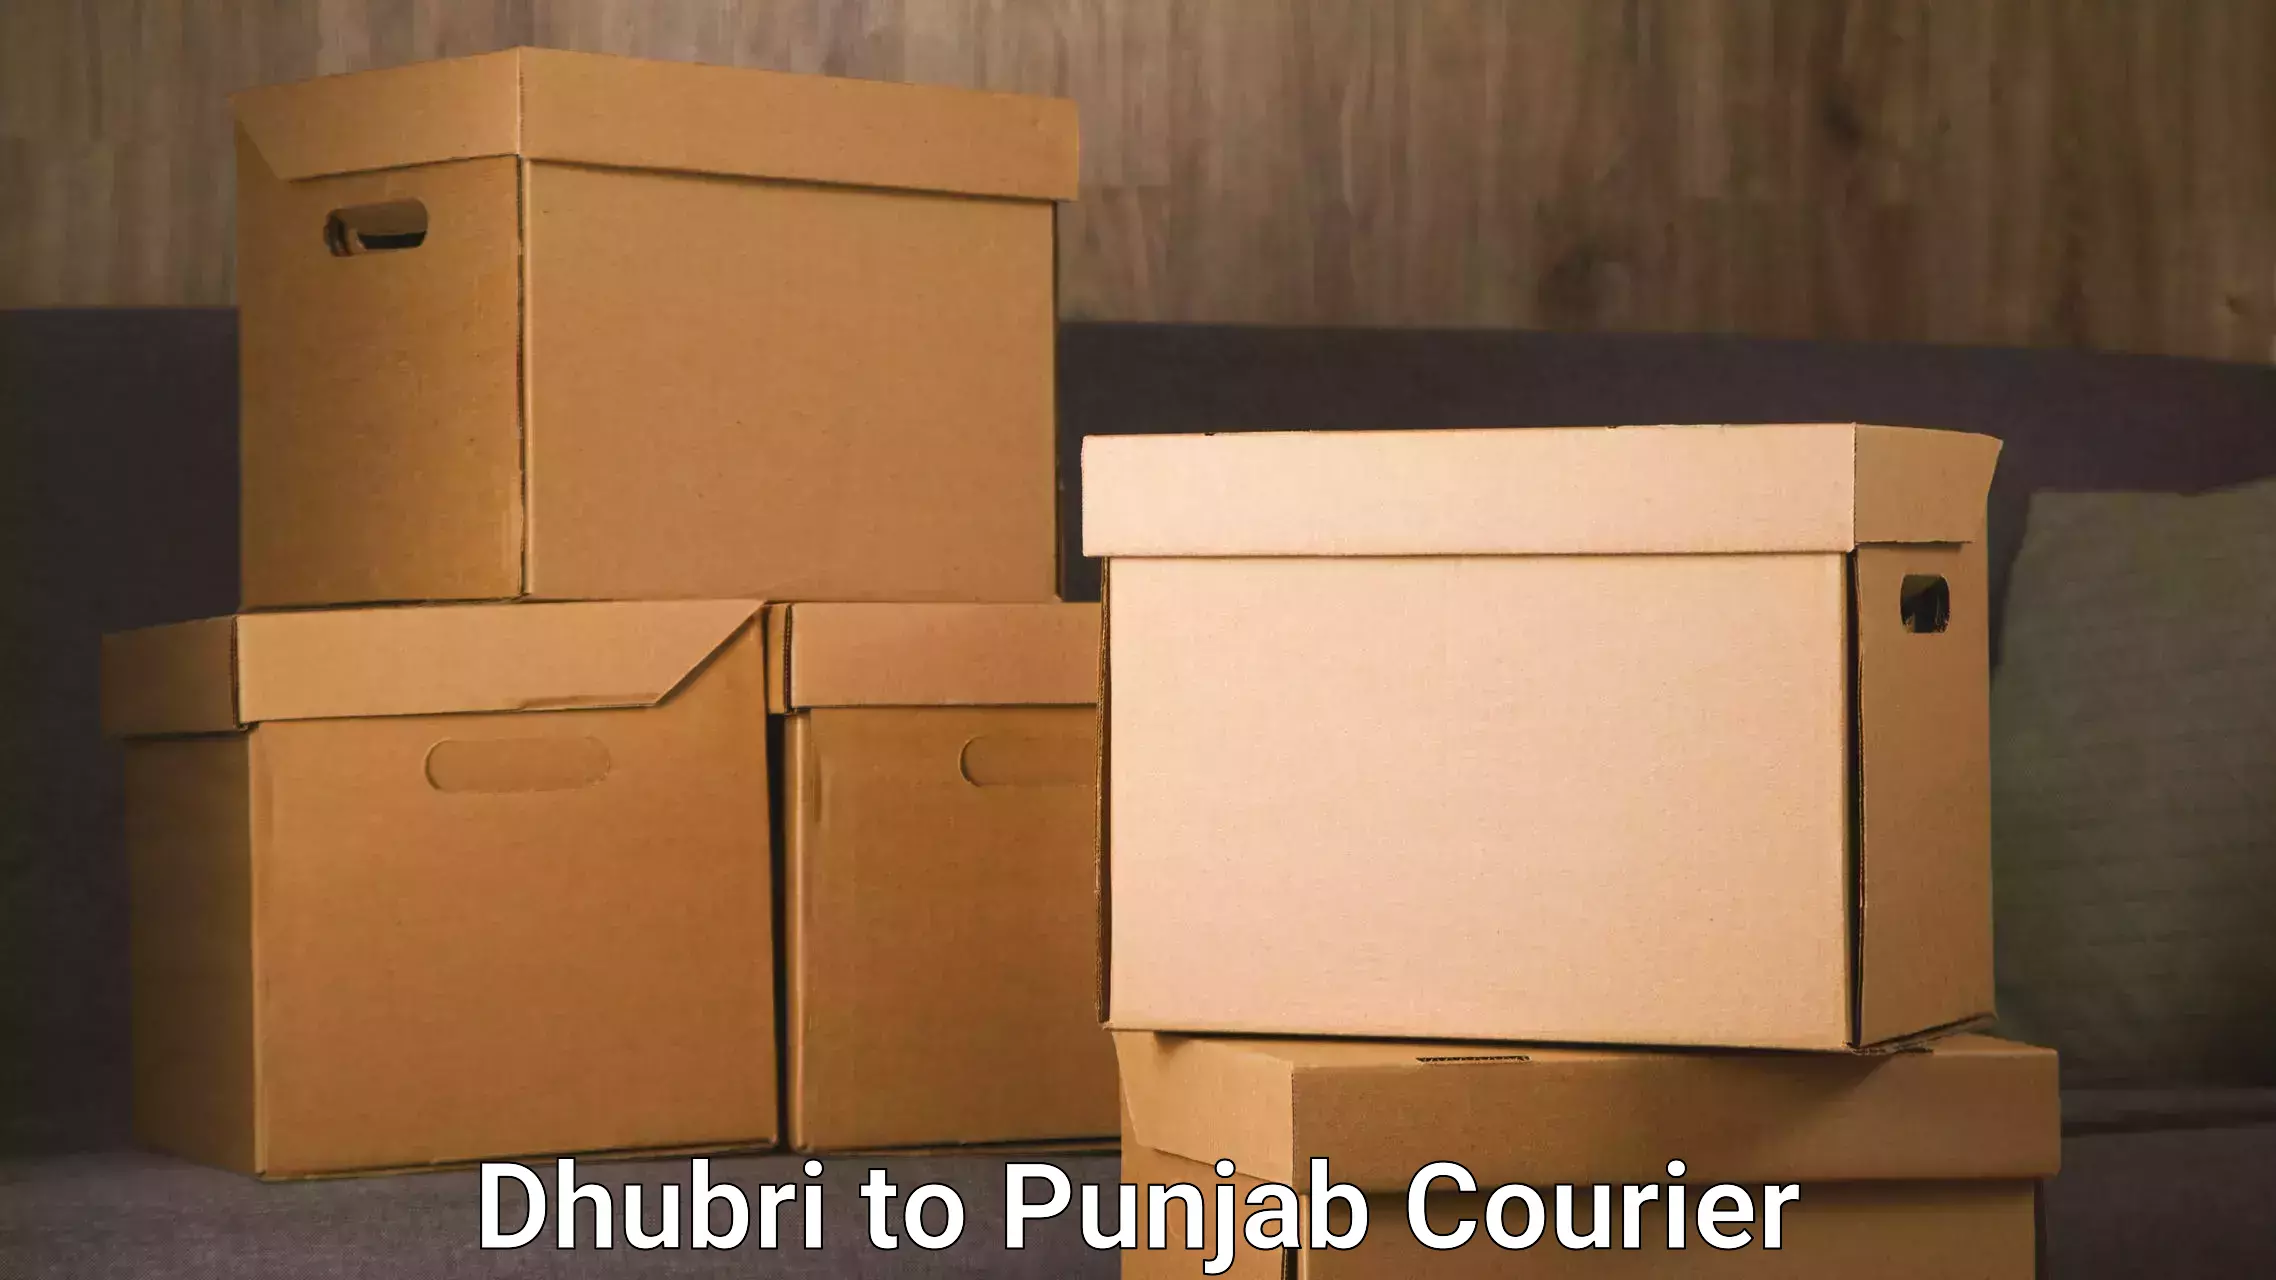 Global logistics network Dhubri to Zirakpur